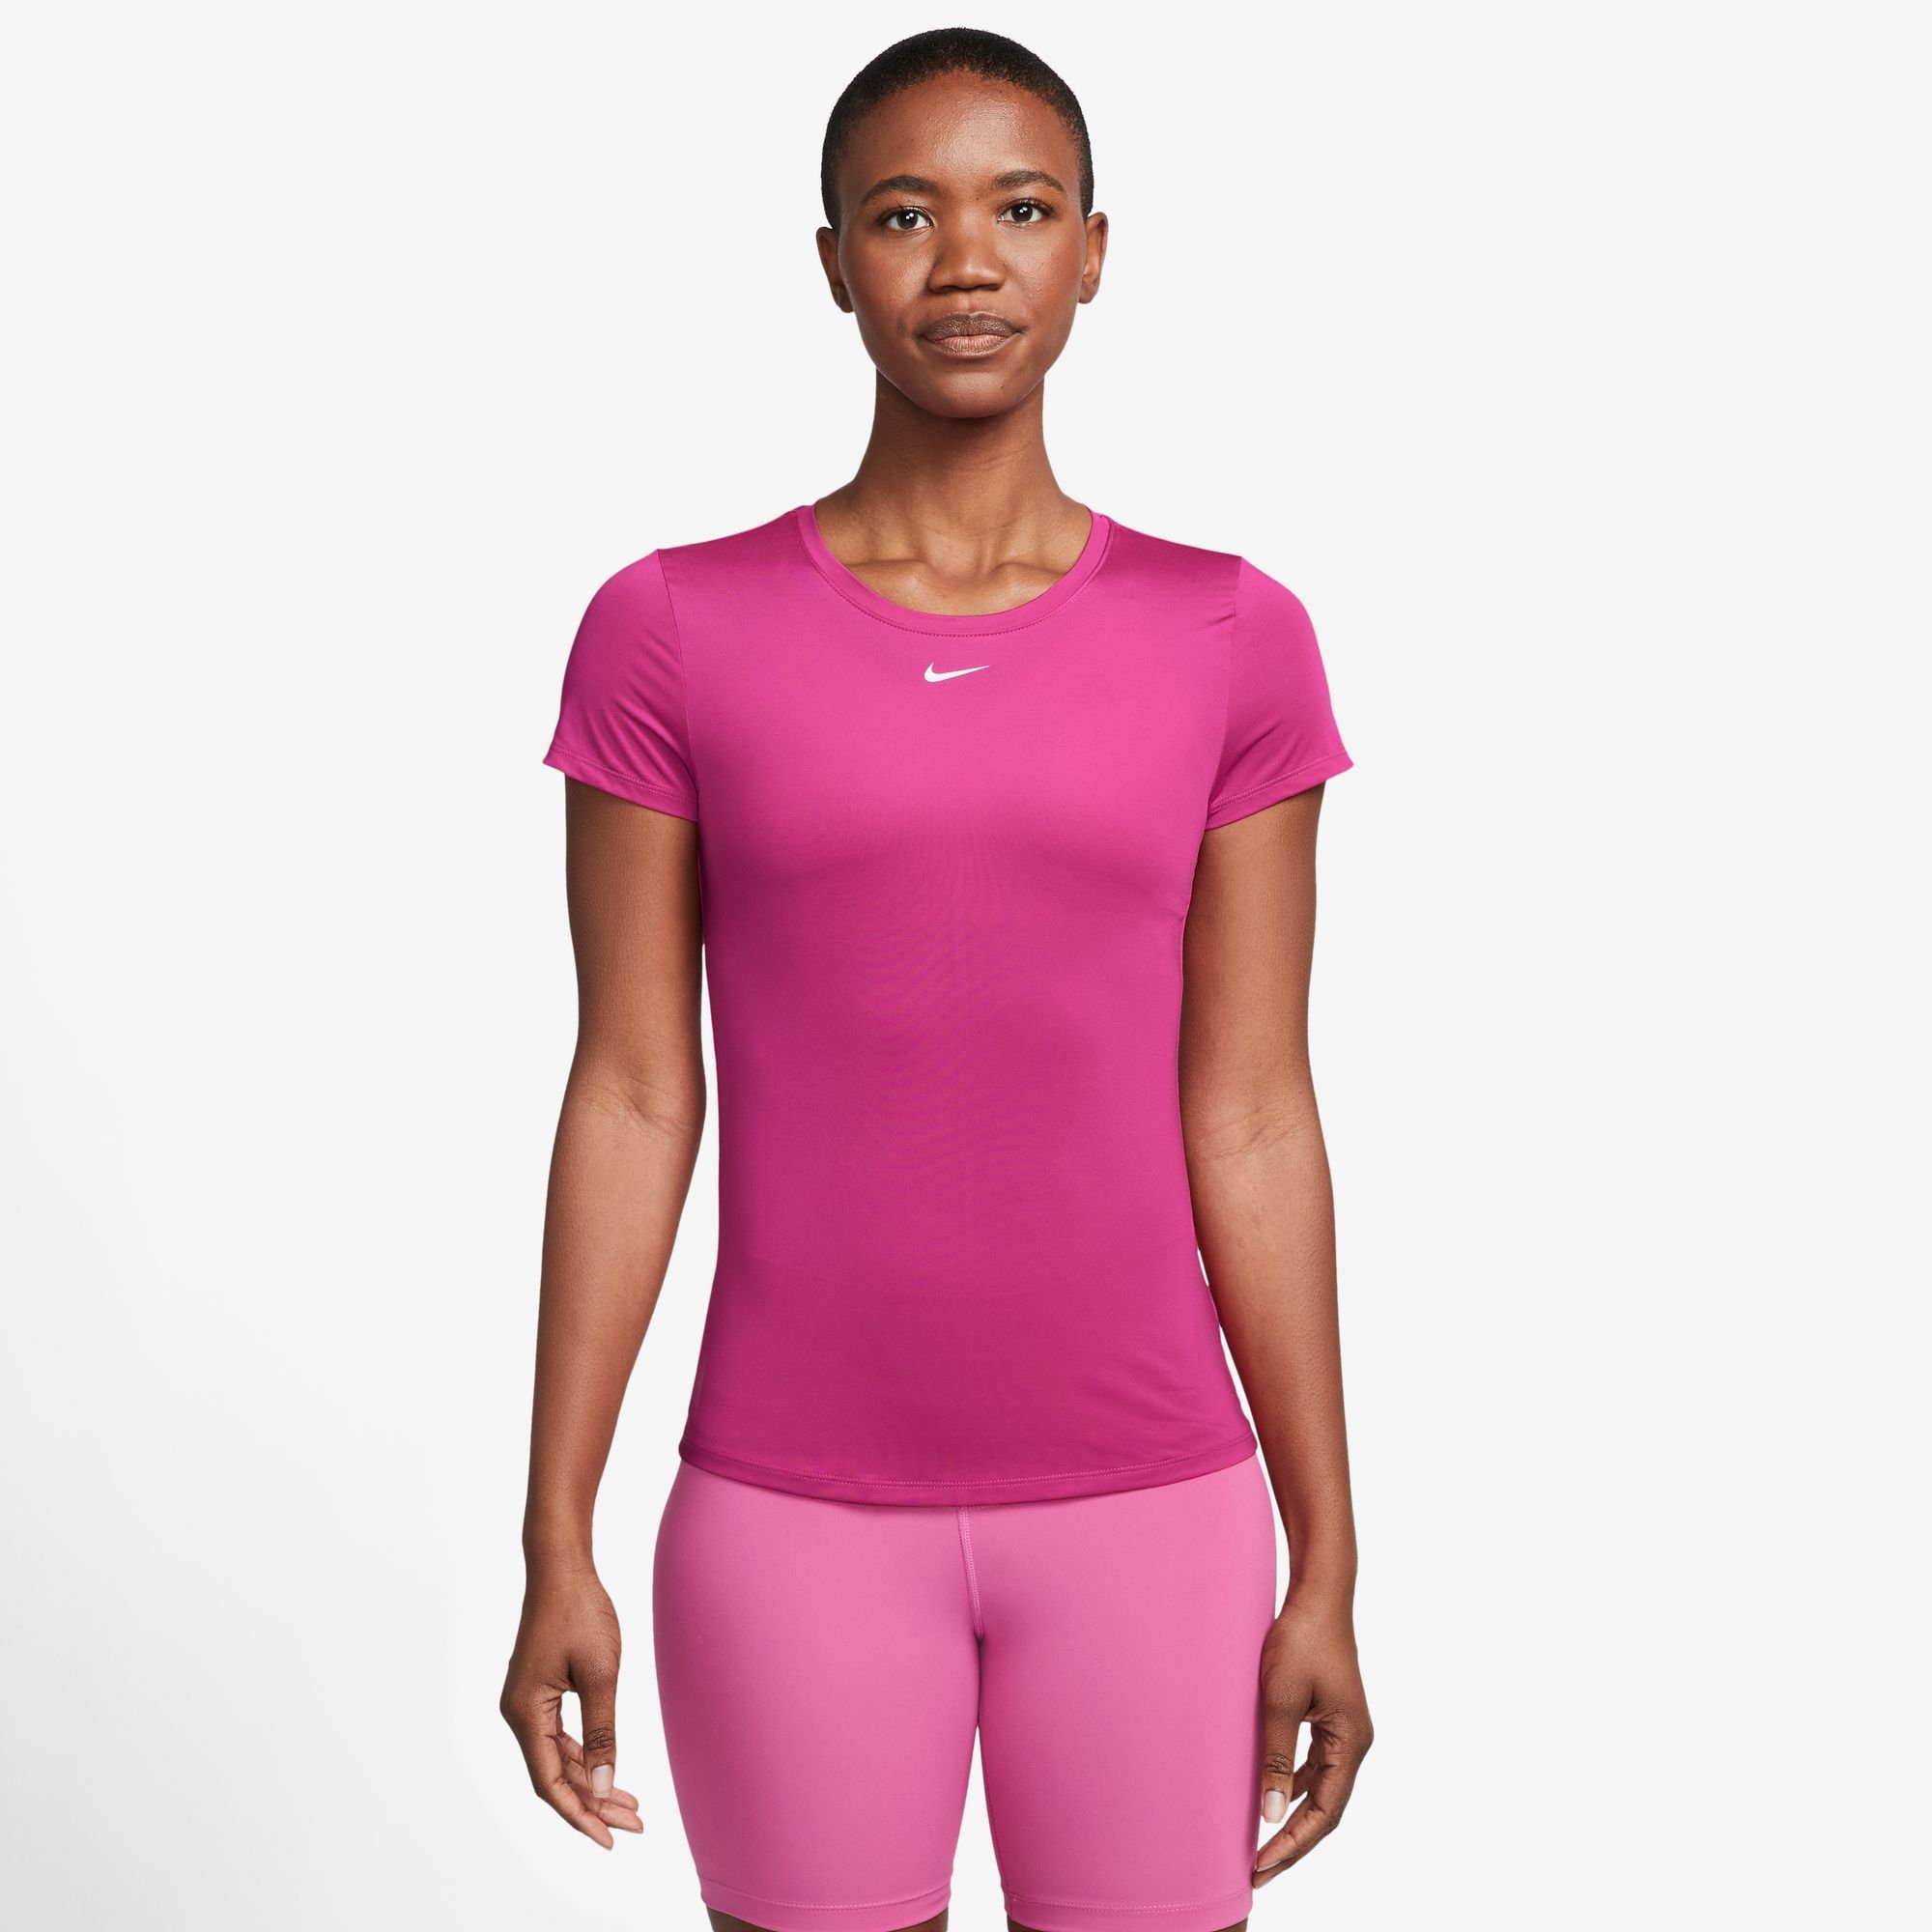 SLIM FIT ONE DRI-FIT FIREBERRY/WHITE SHORT-SLEEVE Nike Trainingsshirt WOMEN'S TOP